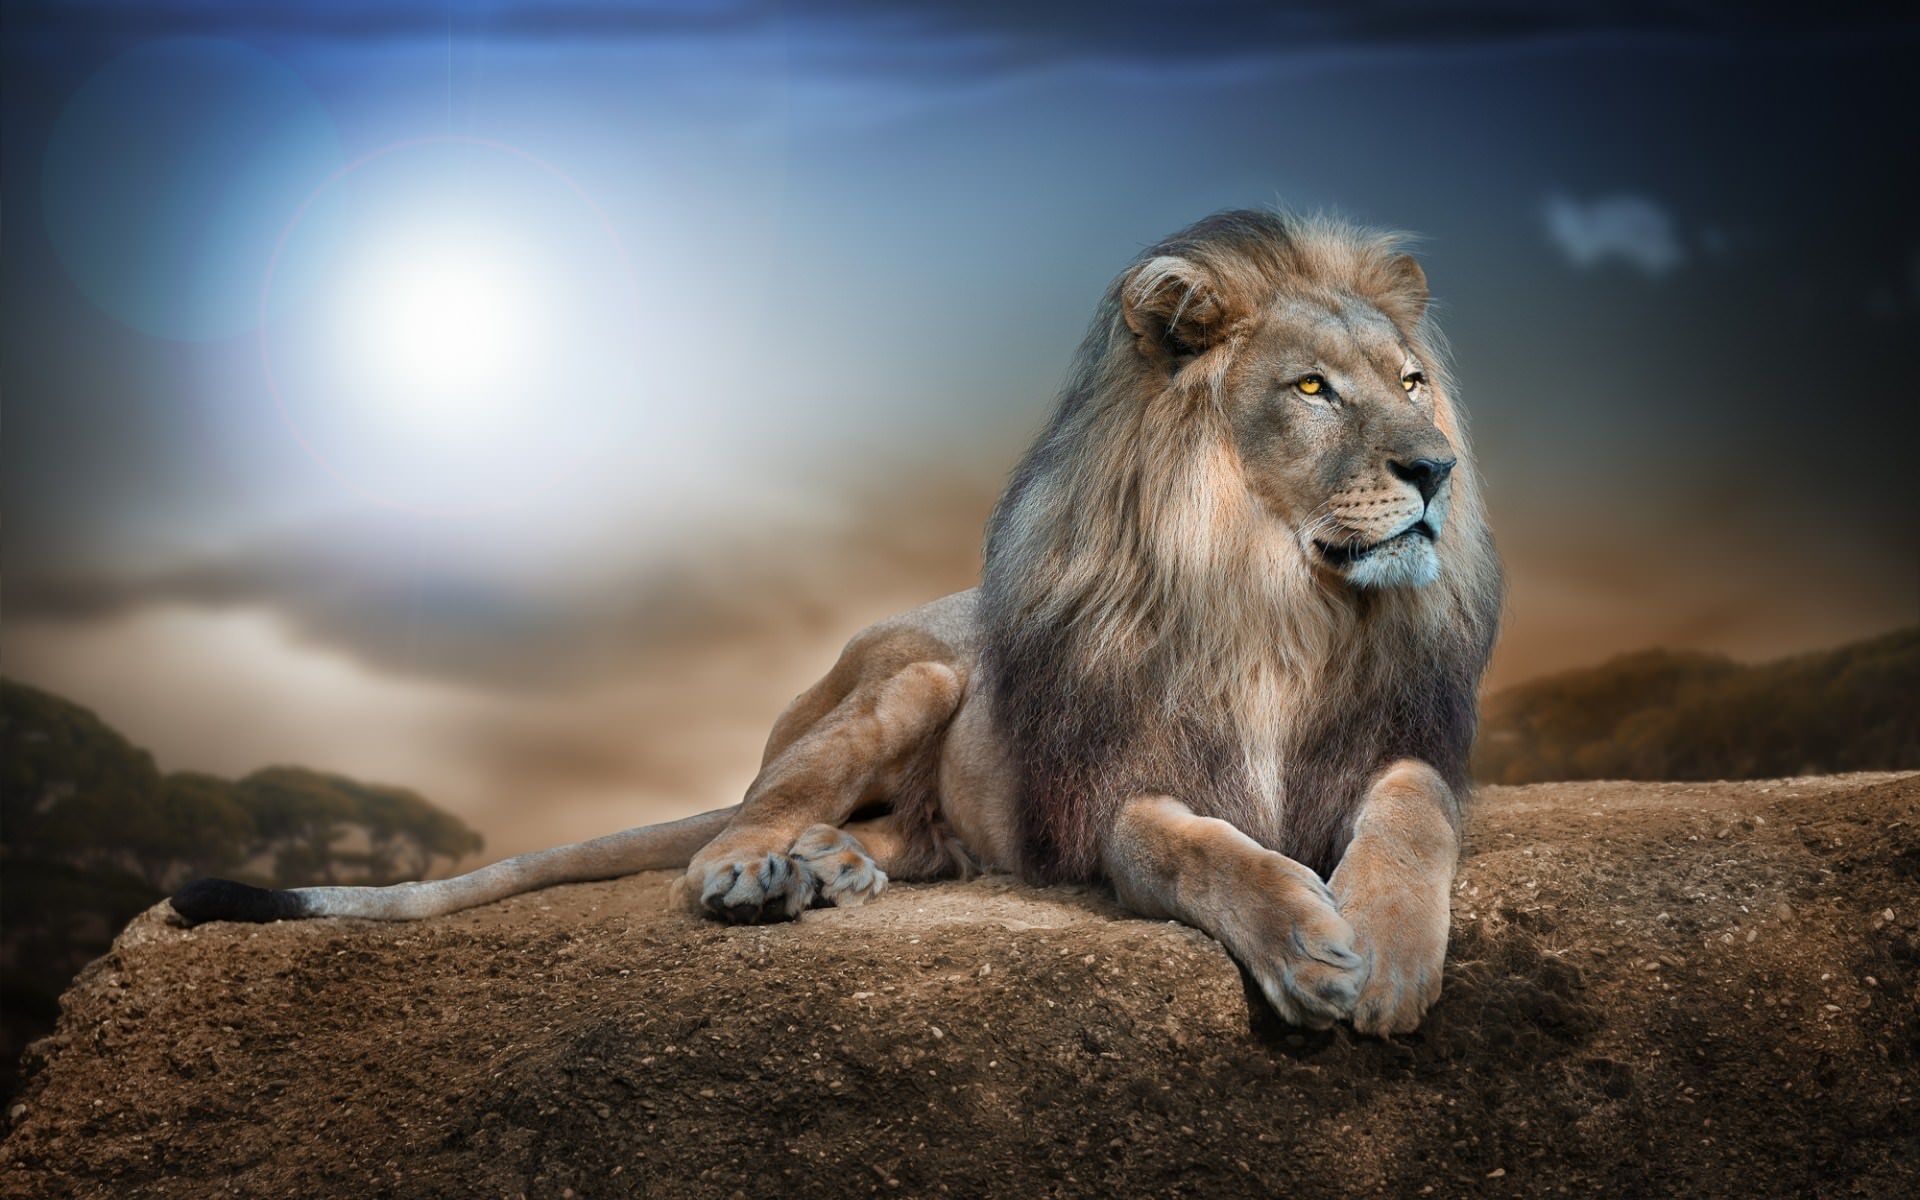 Majestic Lion Wallpaper